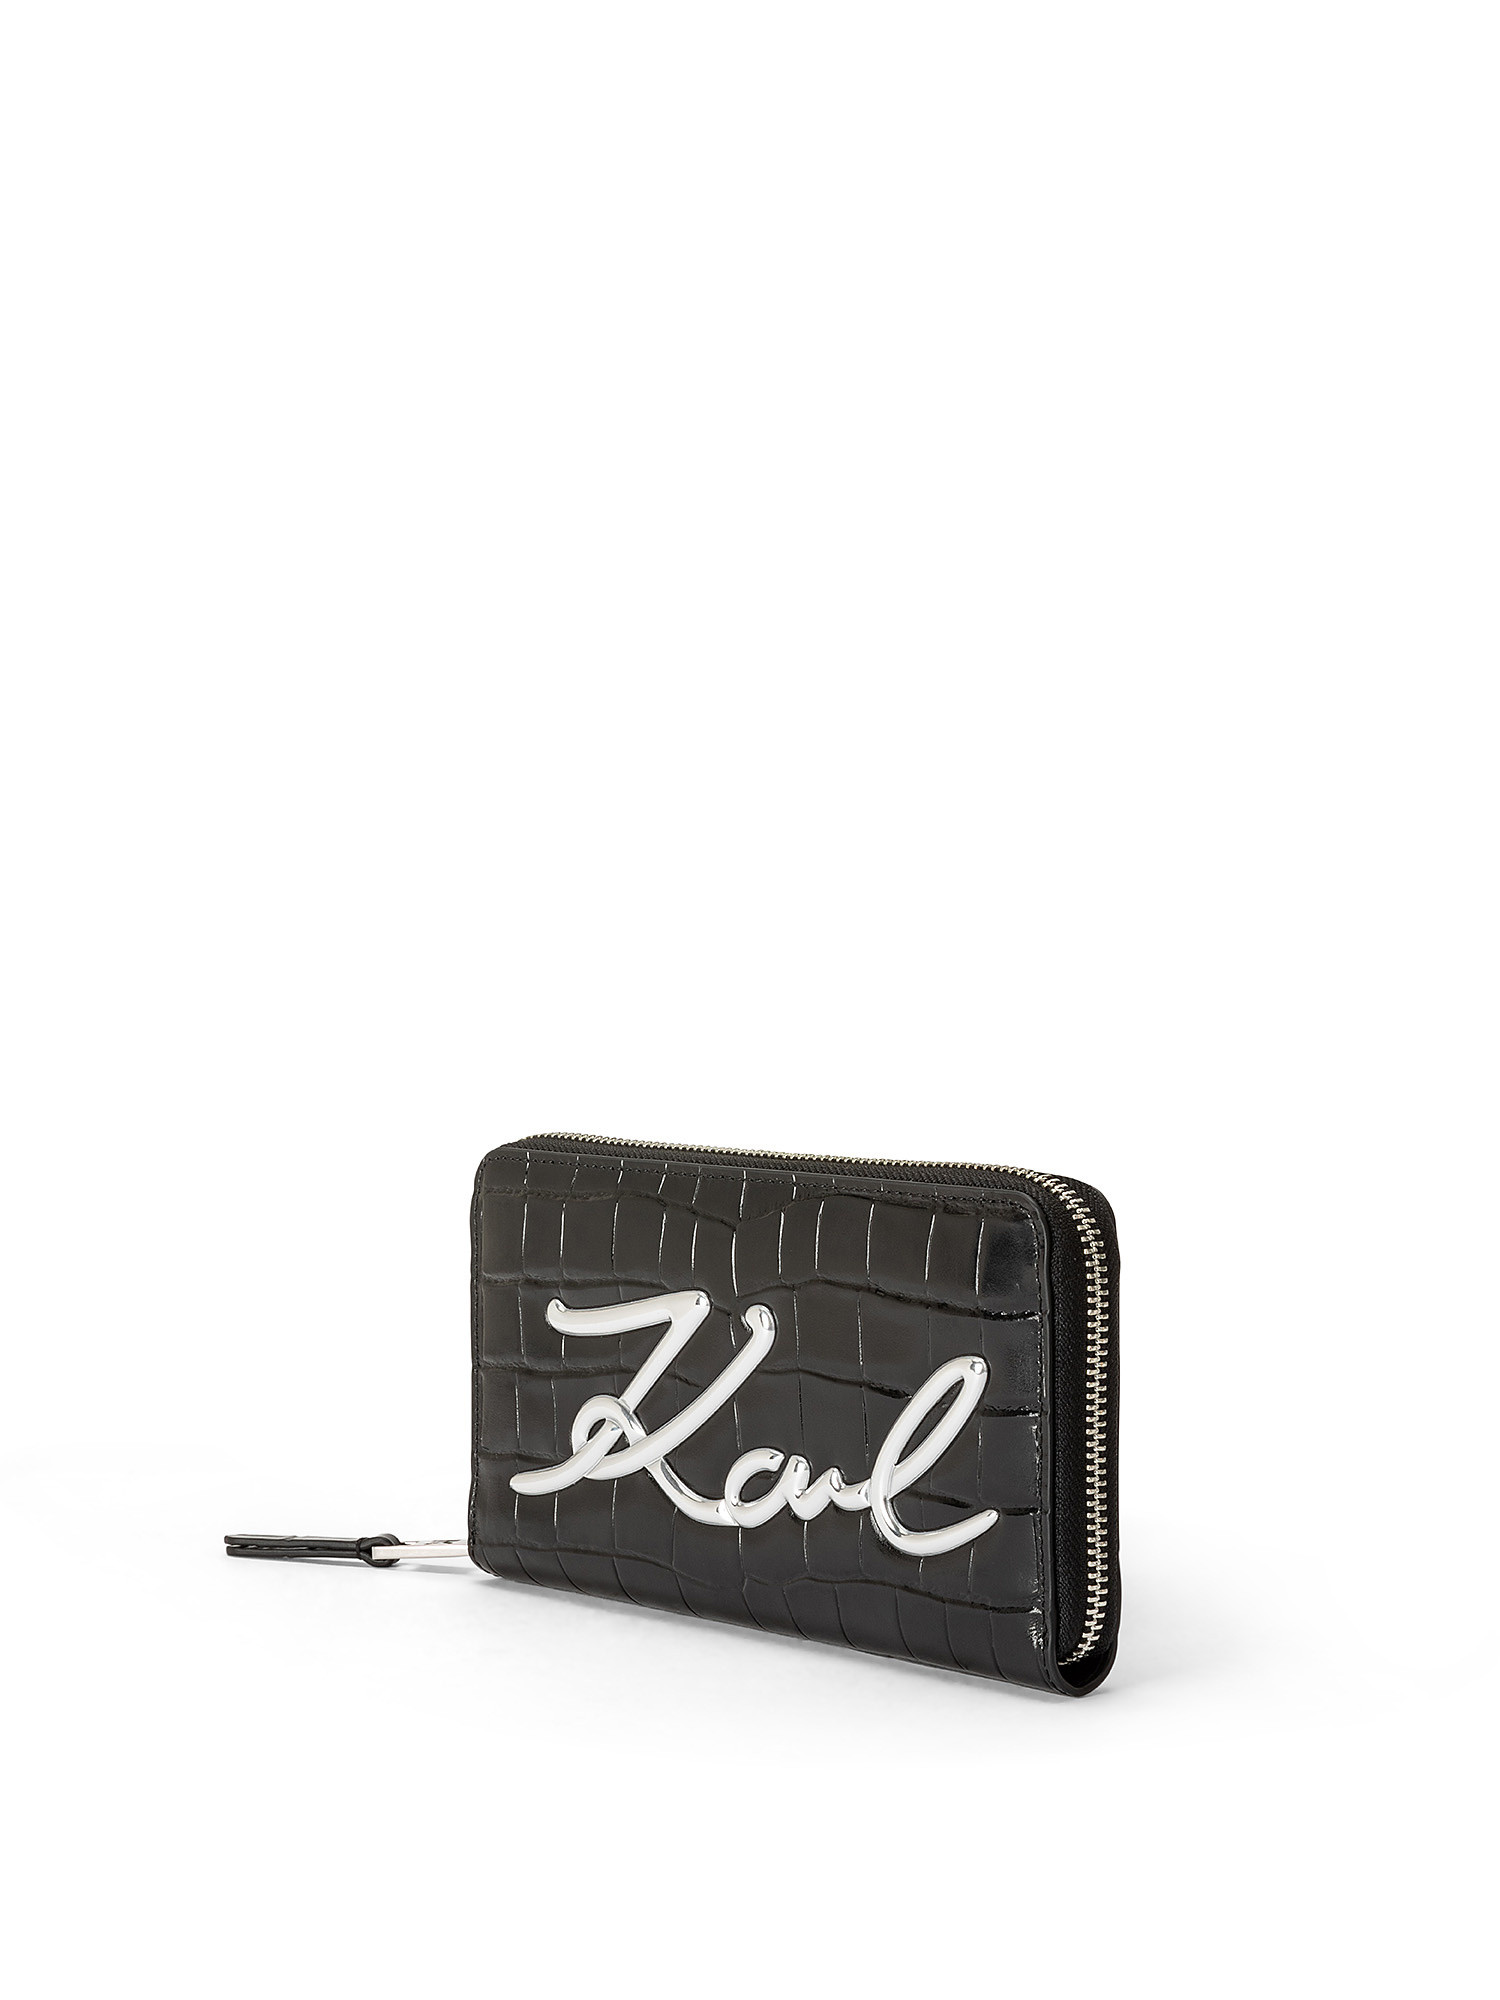 Karl Lagerfeld - K/Signature Croc Cont Wallet, Black, large image number 1